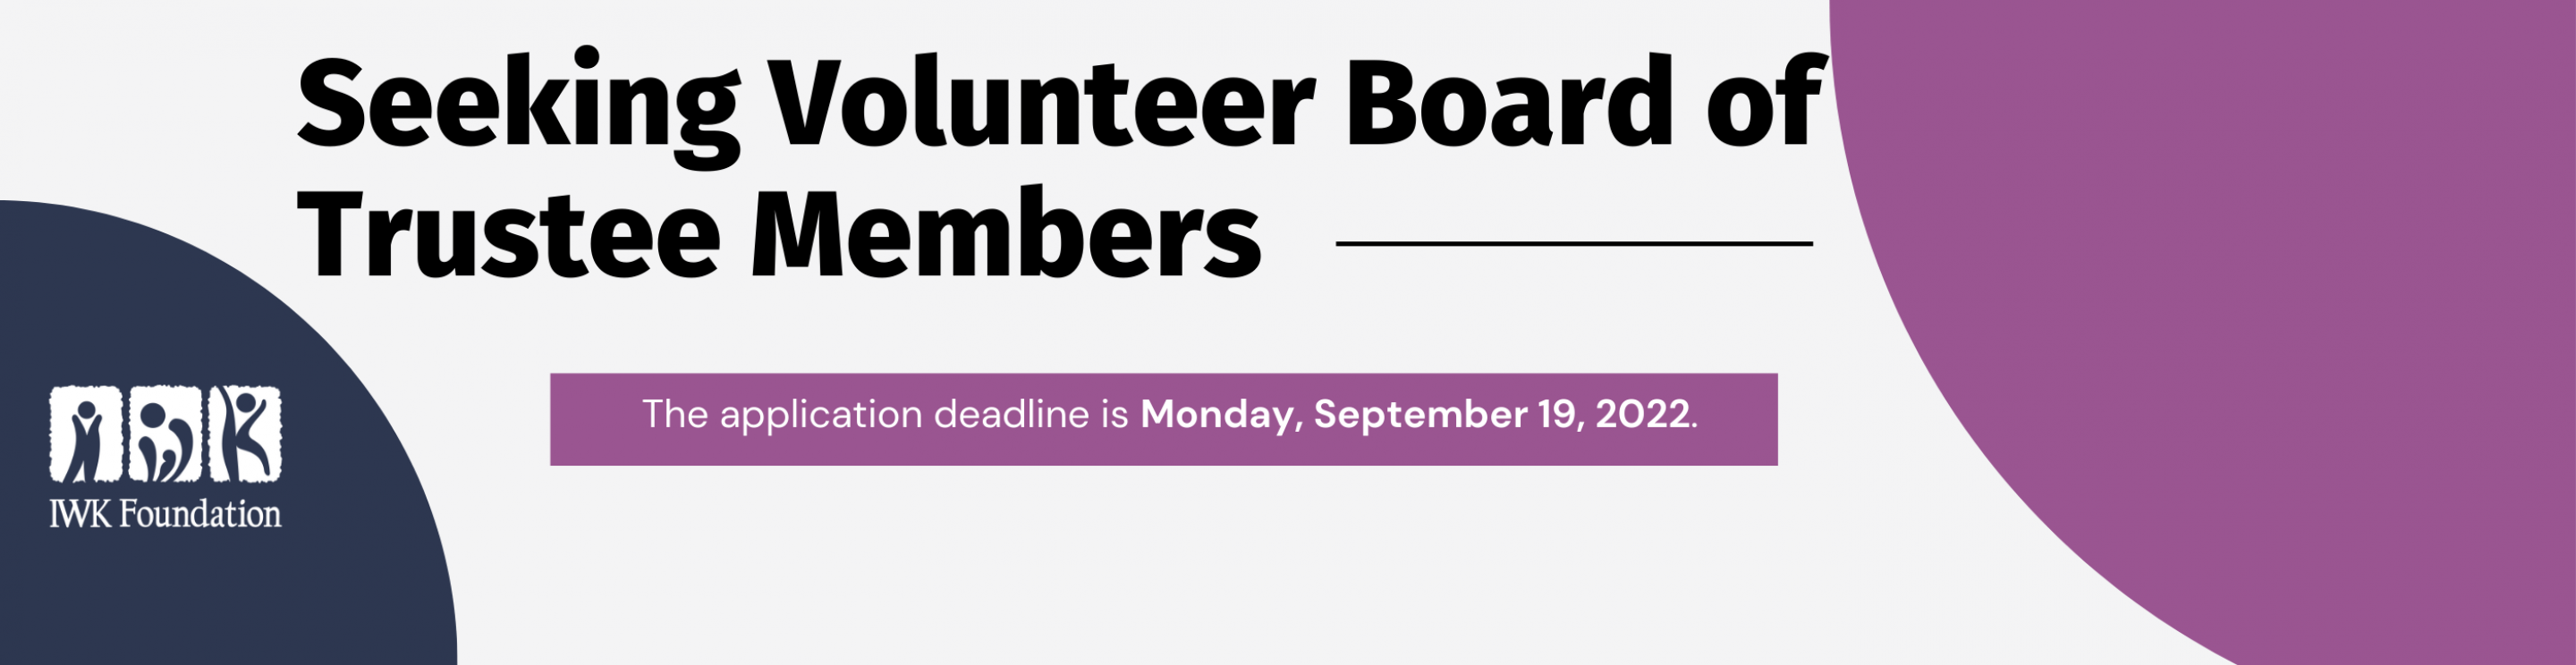 Seeking Board of Trustee Members banner image